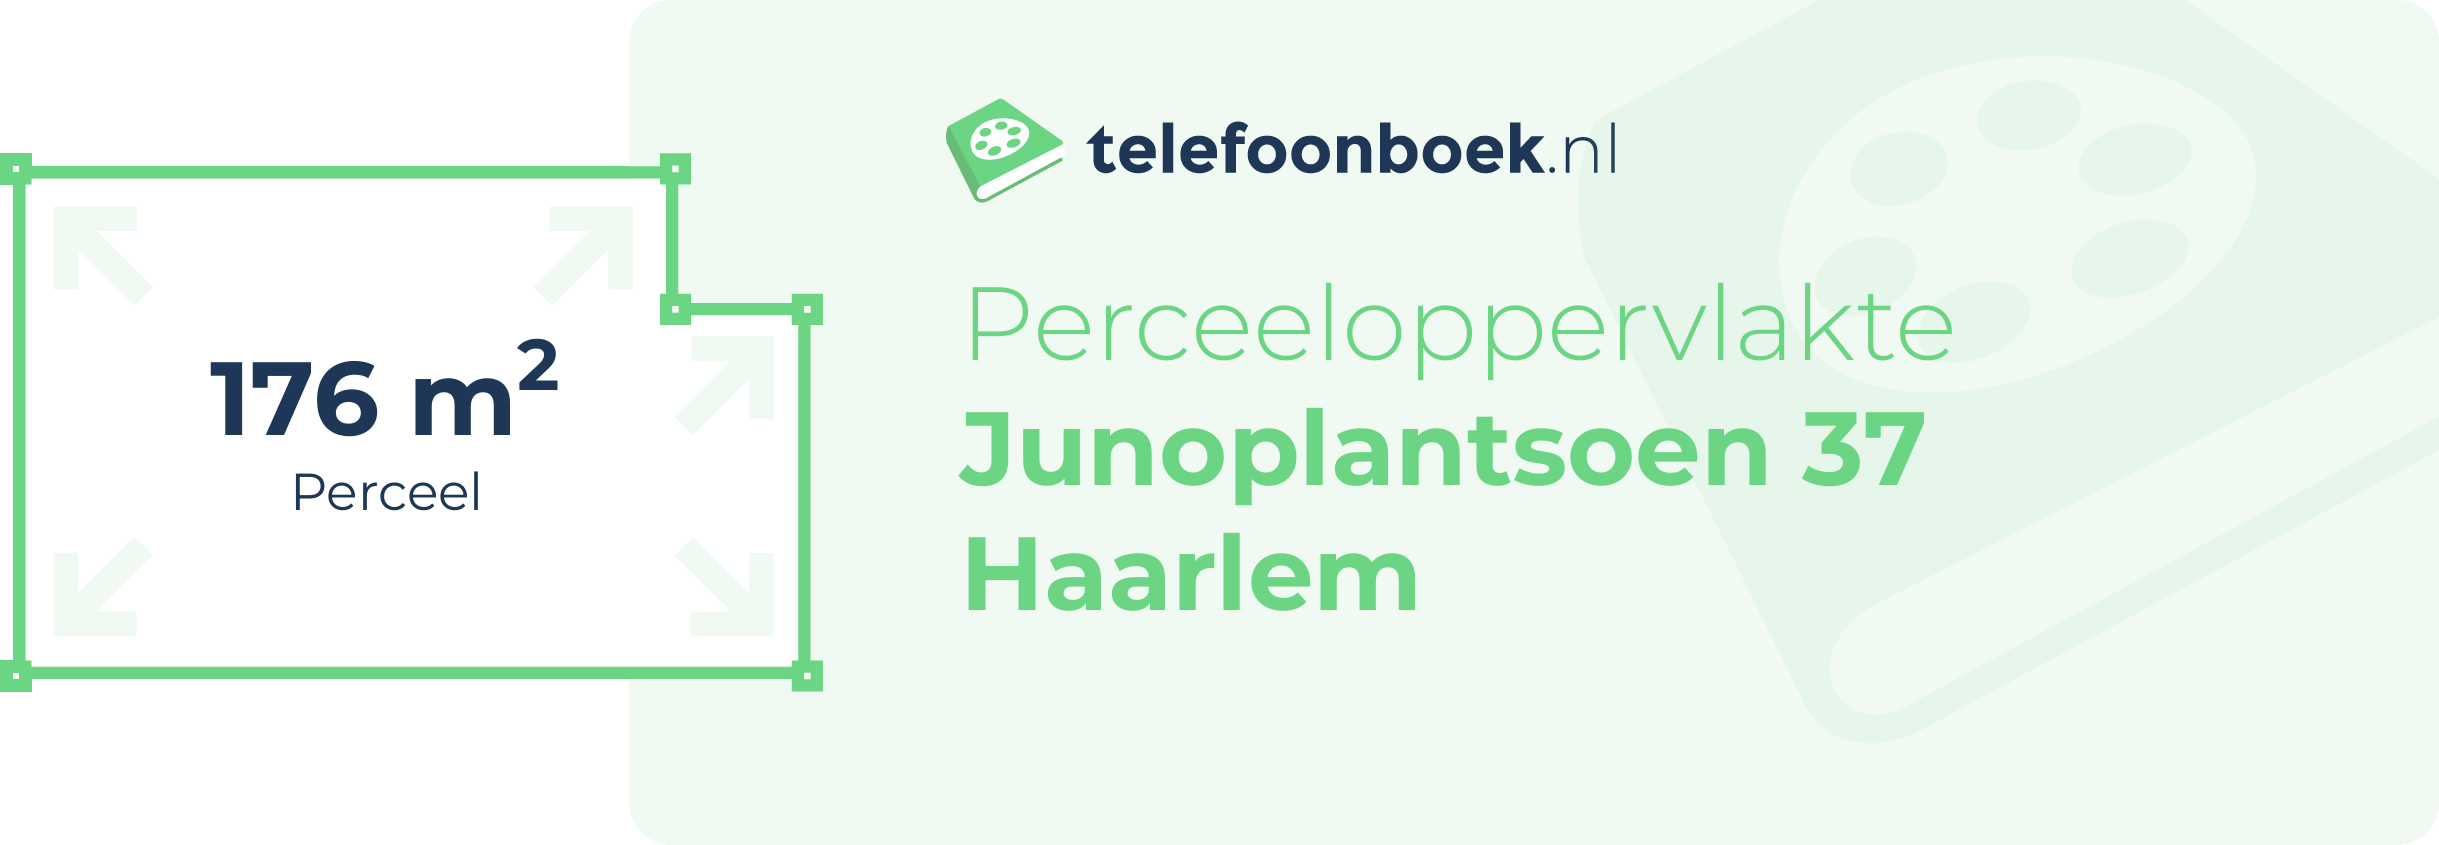 Perceeloppervlakte Junoplantsoen 37 Haarlem